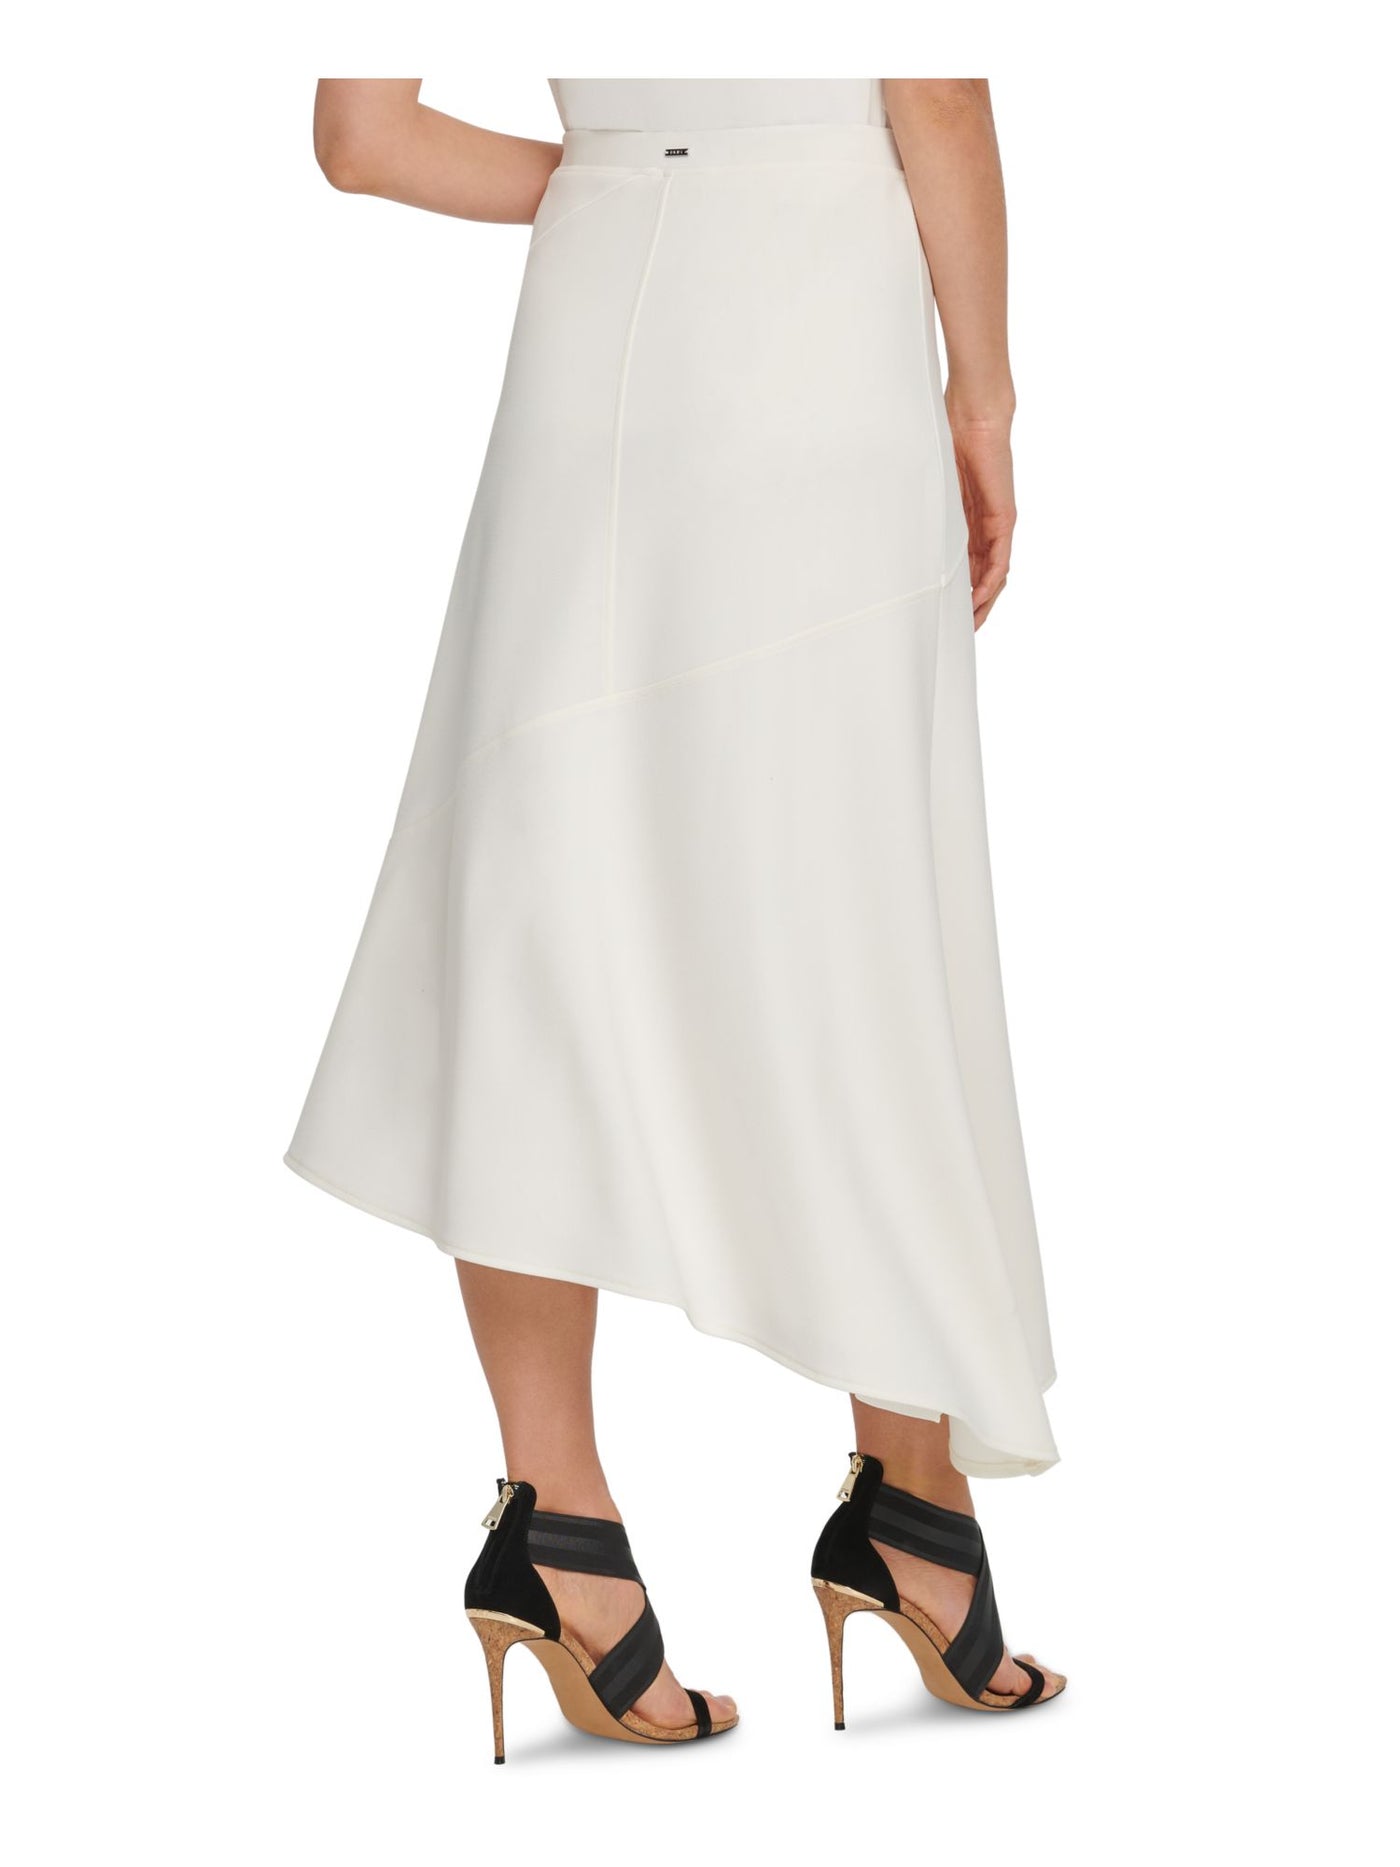 DKNY Womens Ivory Tea-Length Shift Skirt XS